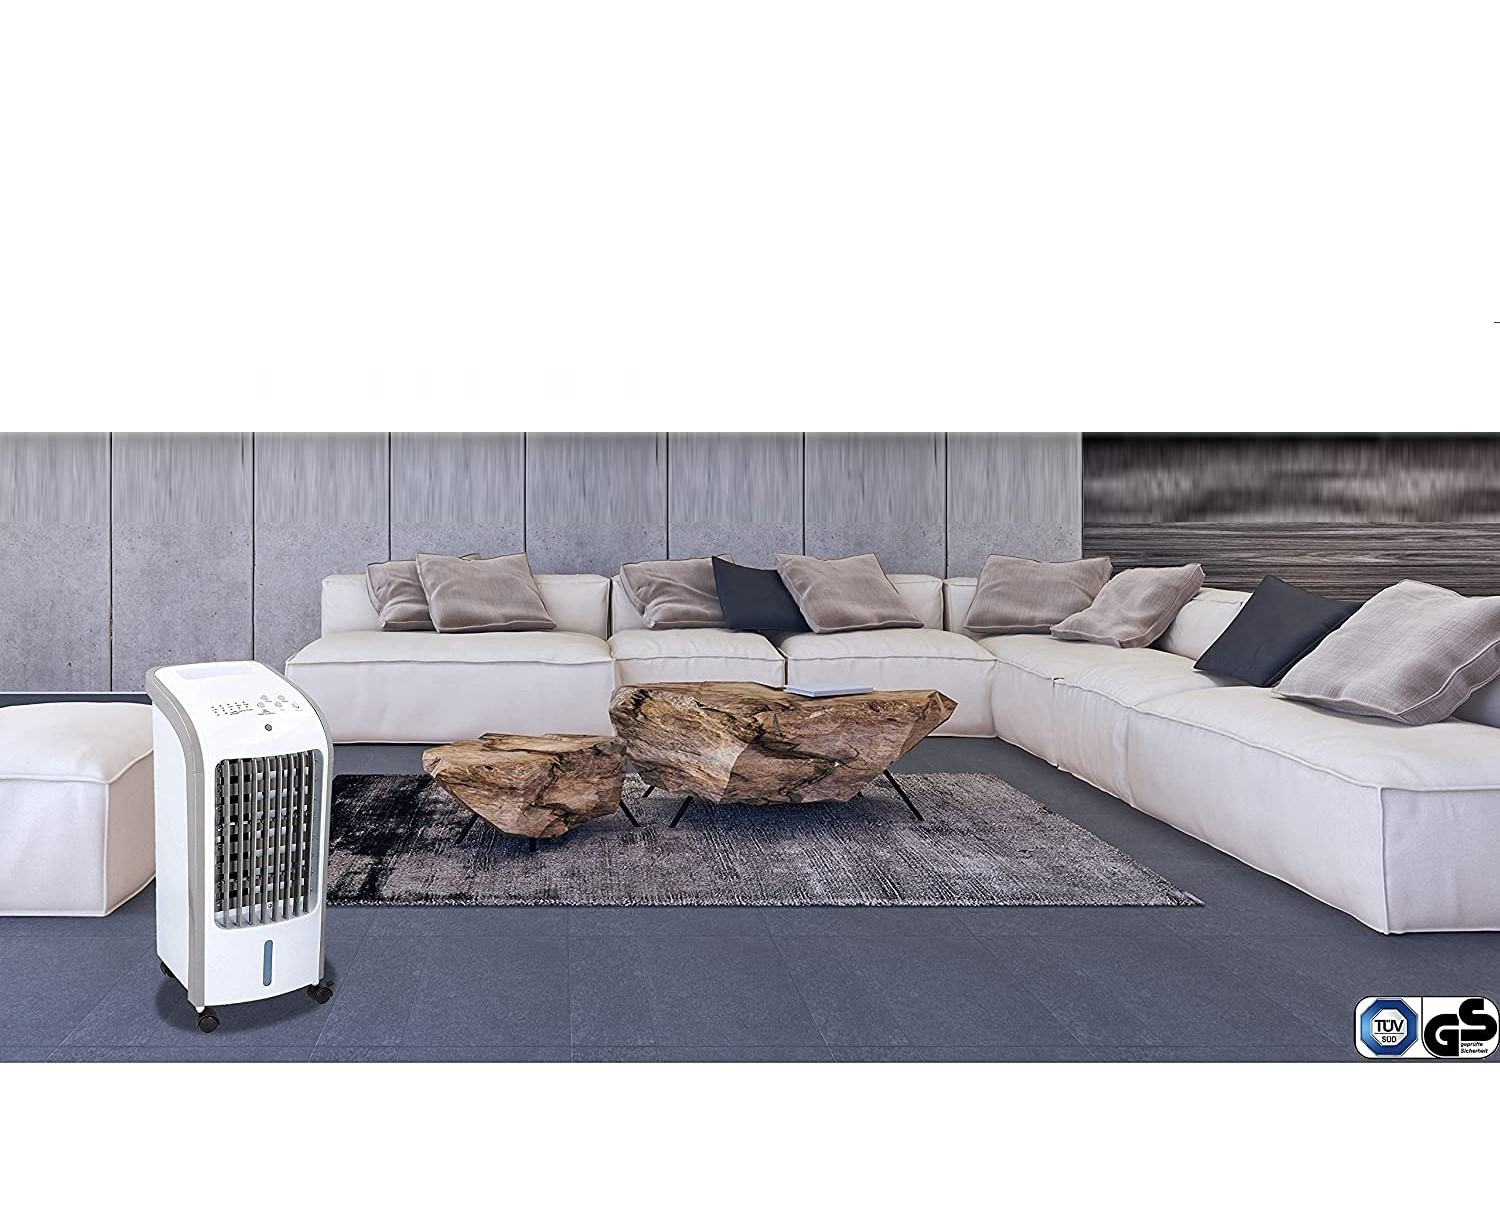 JUNG MESKO Aircooler FB m², (Max. A+) Klimagerät EEK: weiß 35 ohne Raumgröße